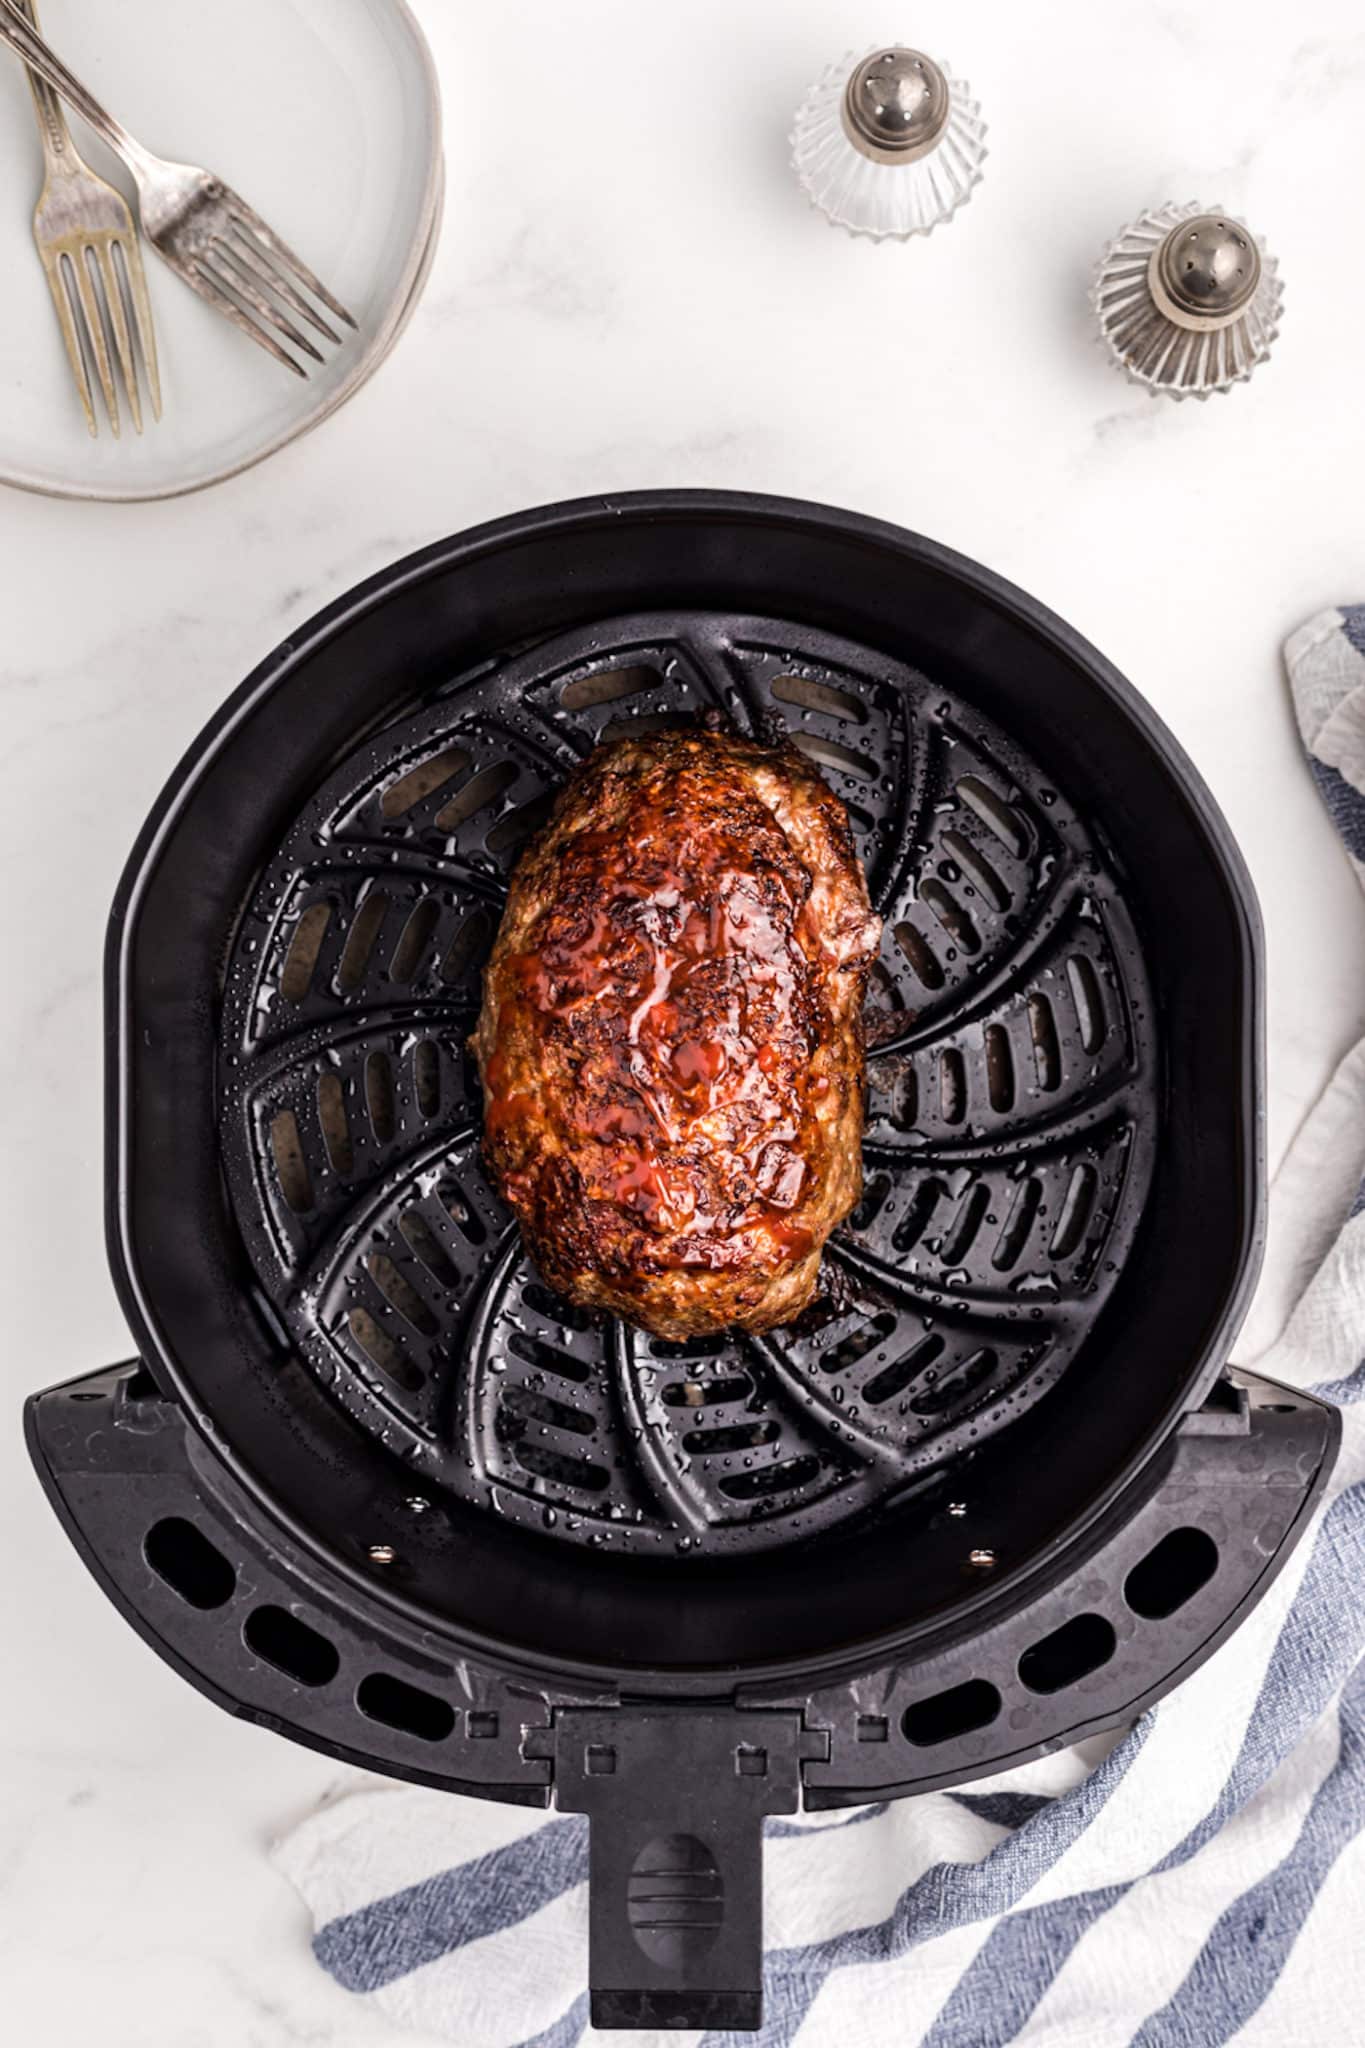 meatloaf cooked inside air fryer.